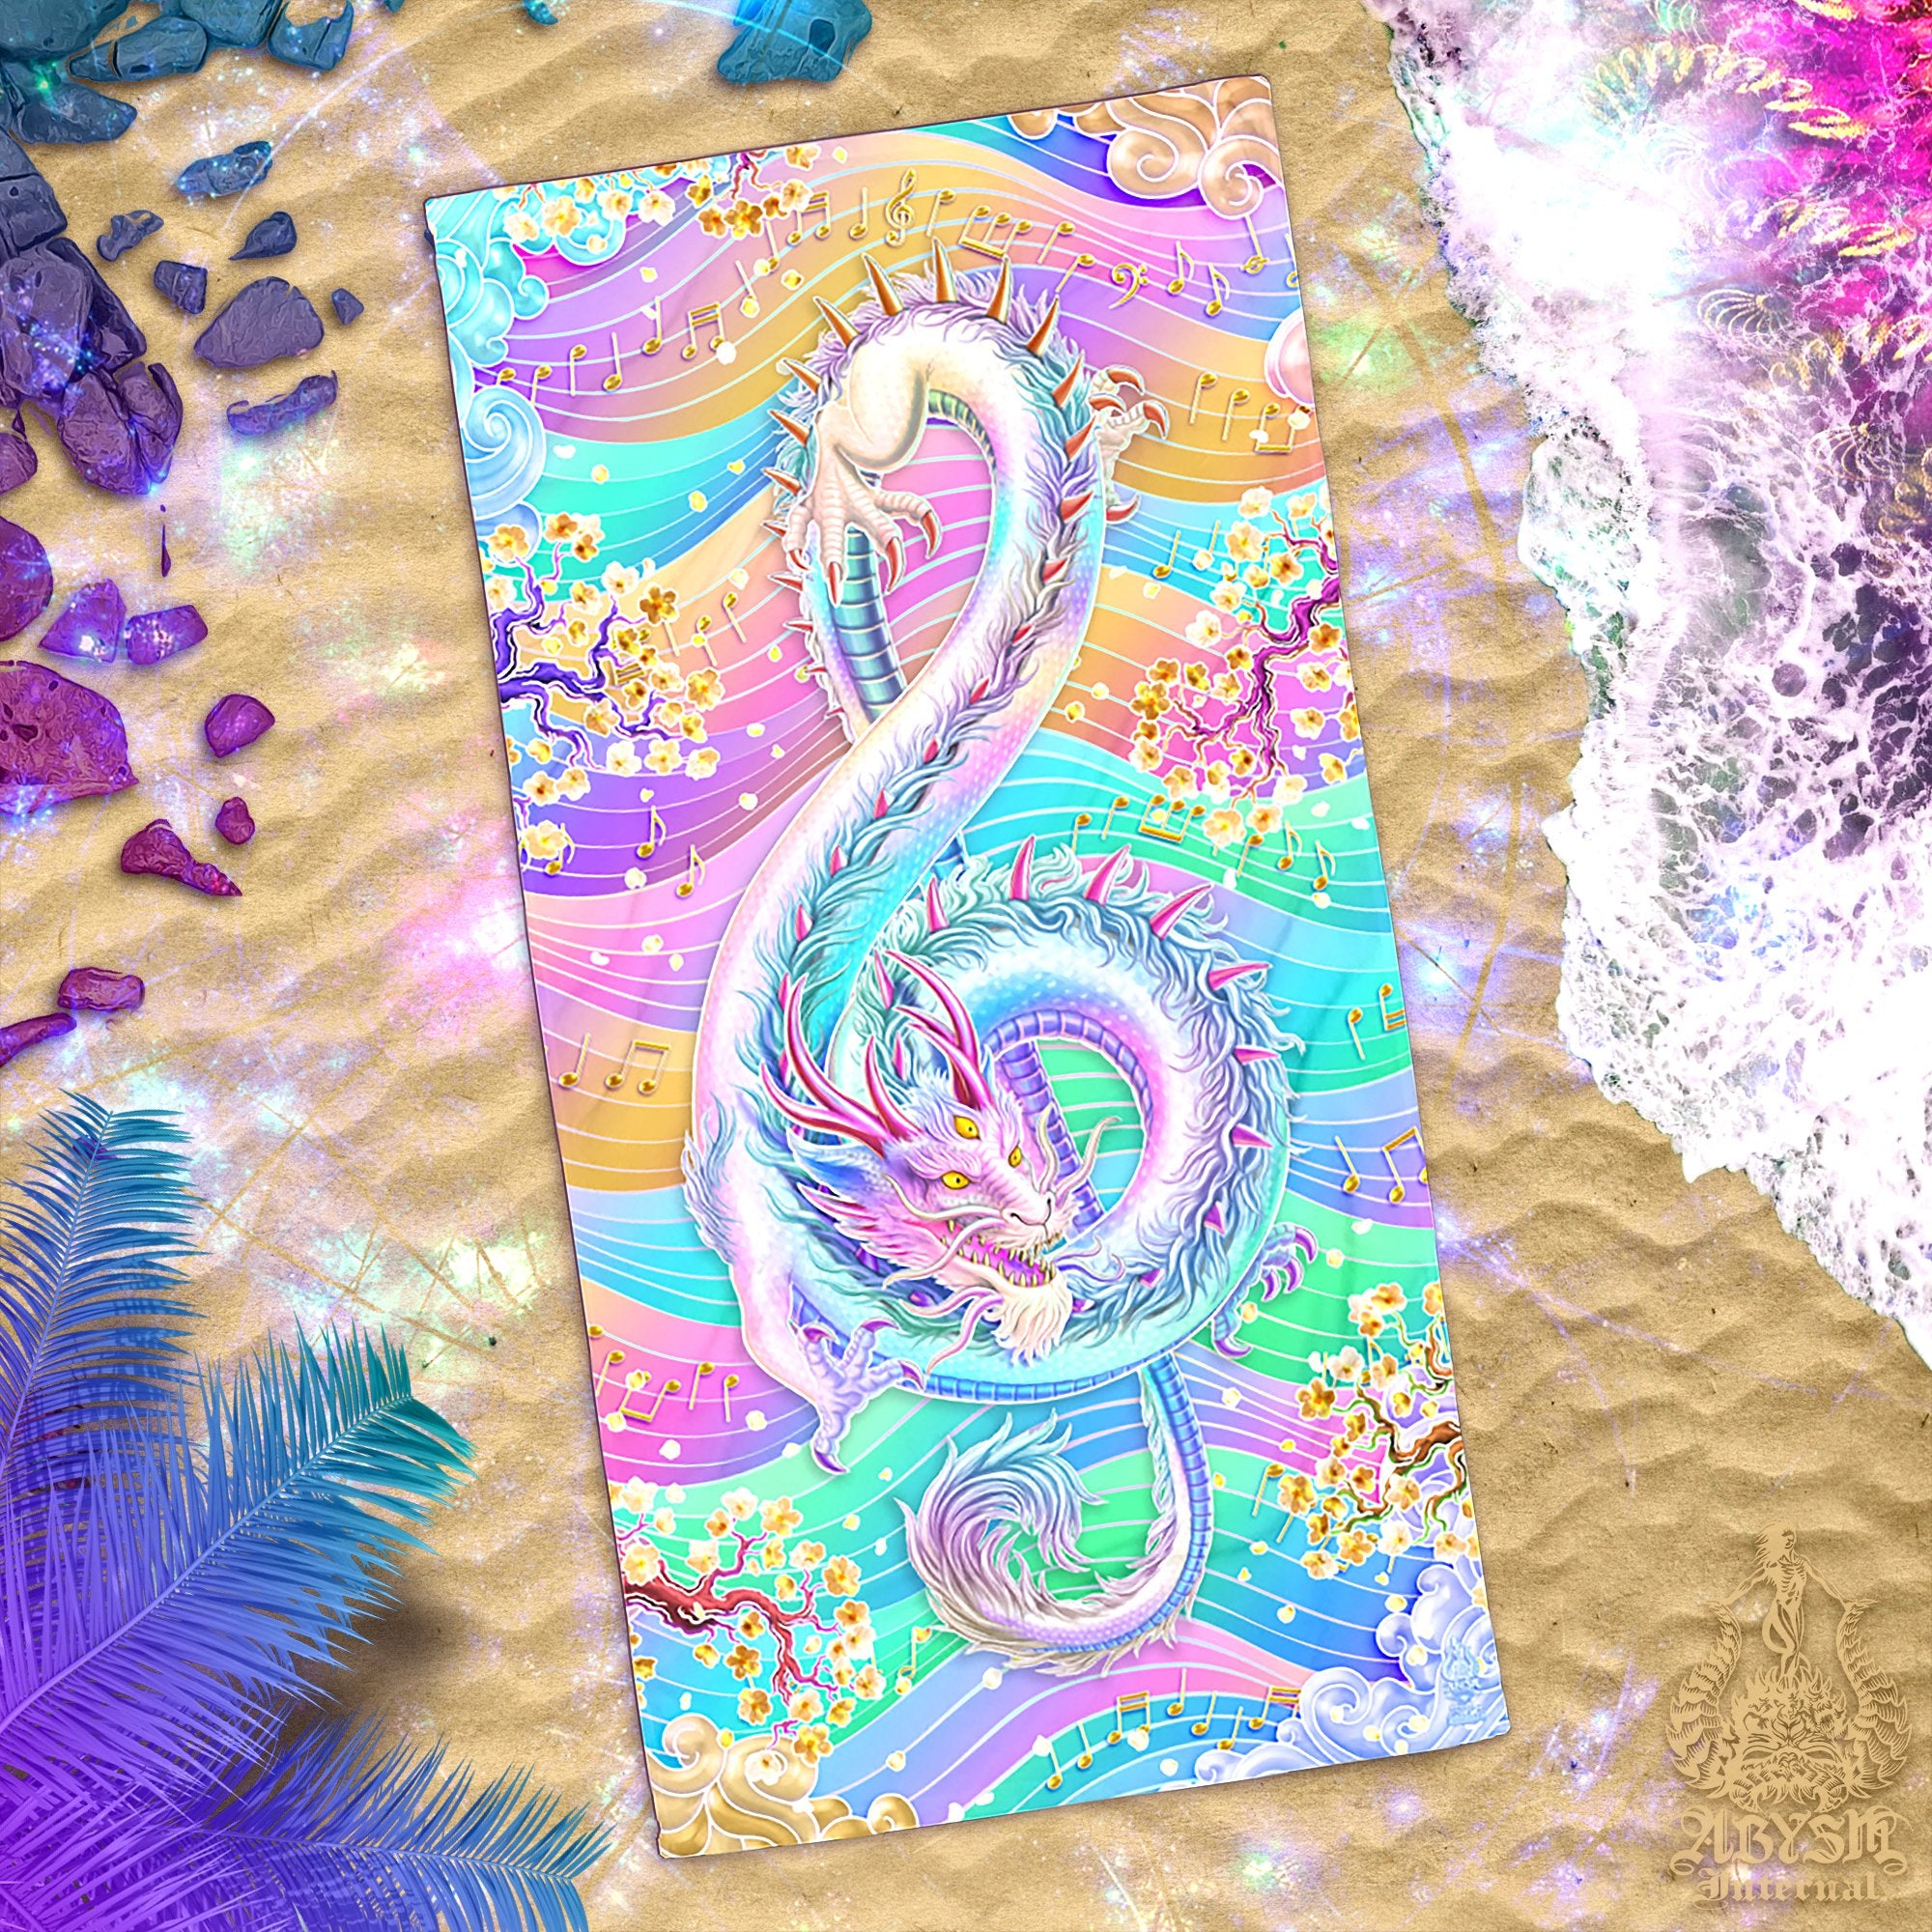 ALL Pastel Beach Towel, Aesthetic Psychedelic Surfer Gift - Daruma, Skull, Medusa, Music Dragon, Octopus, Oni, Spider, Tree of Life, 8 Designs - Abysm Internal